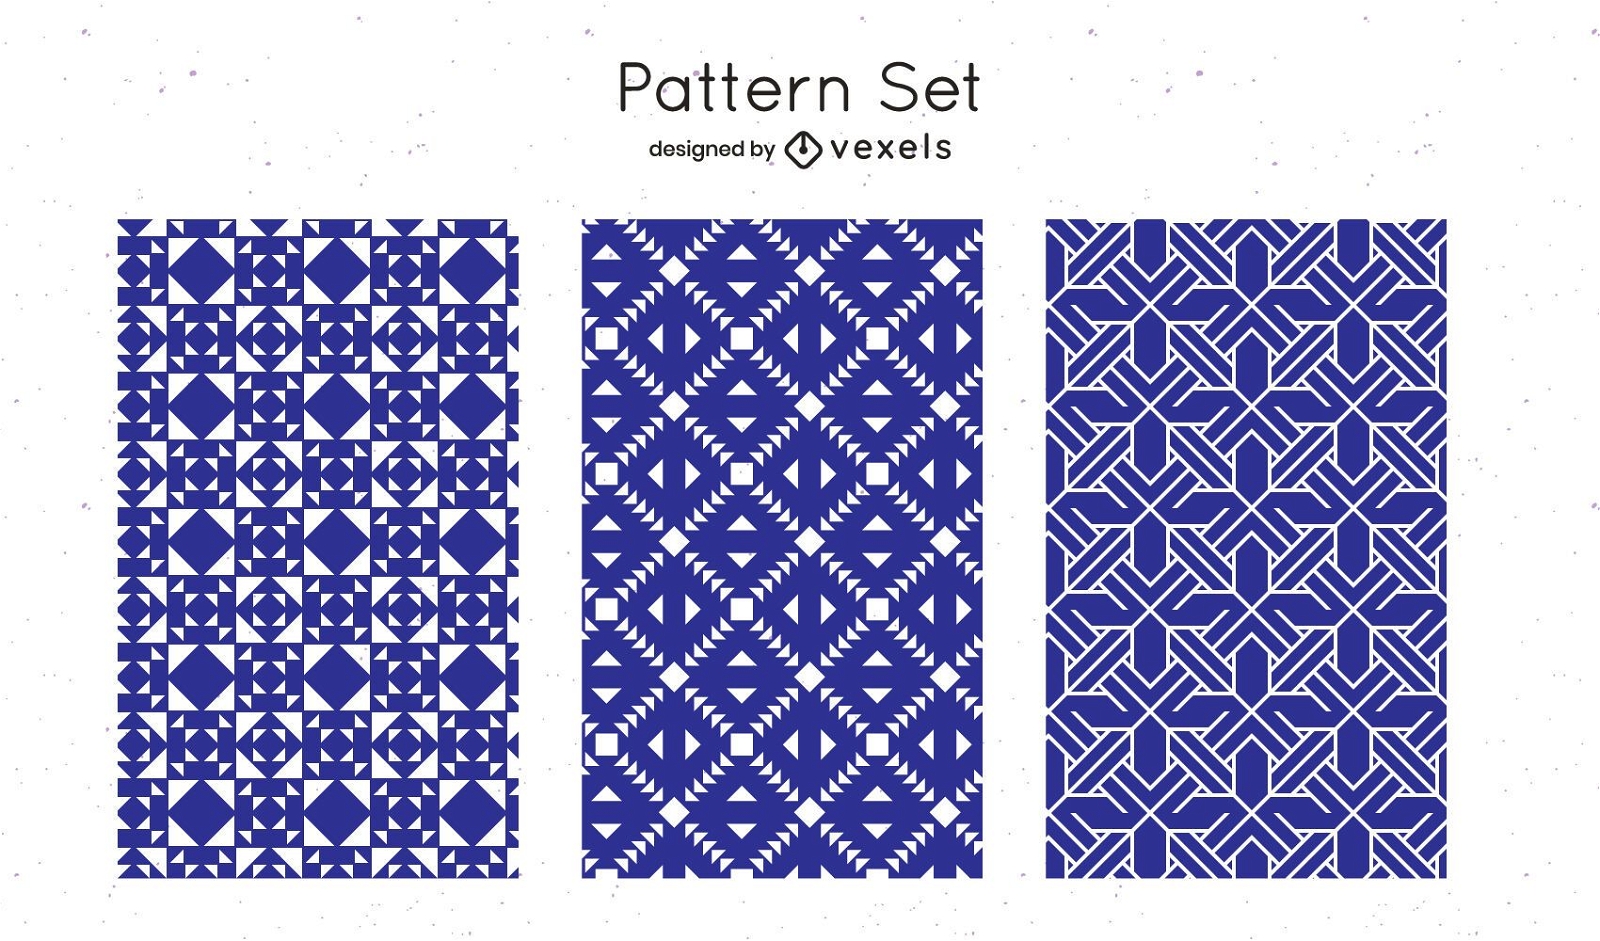 Diseño de patrón geométrico azul